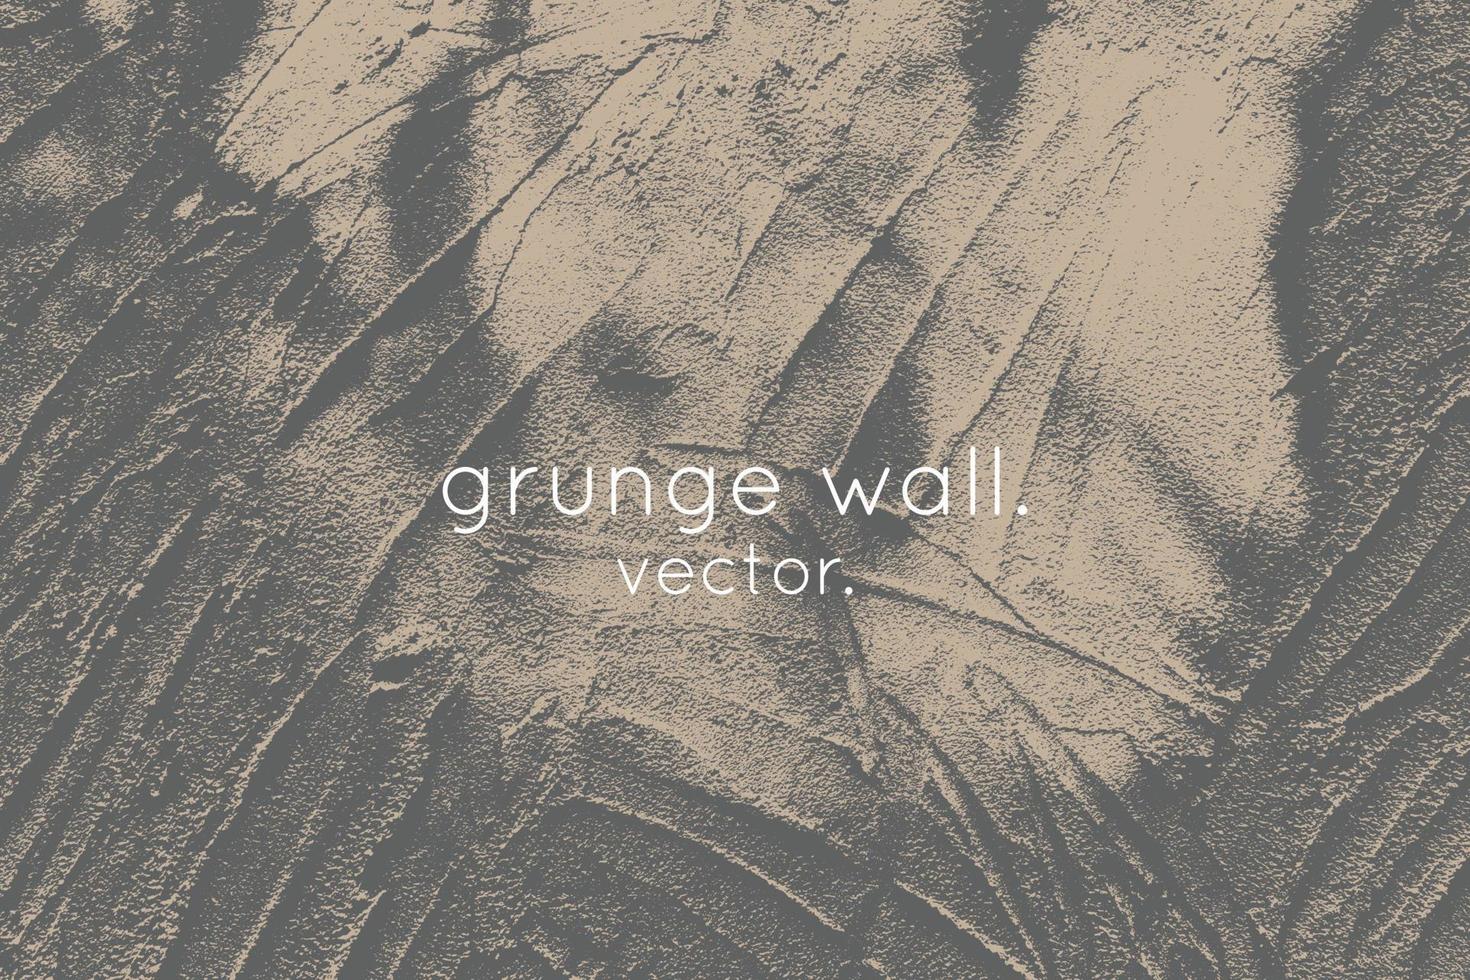 bloque de pared de superficie grungy y fondo de textura abstracta de sombra natural. vector